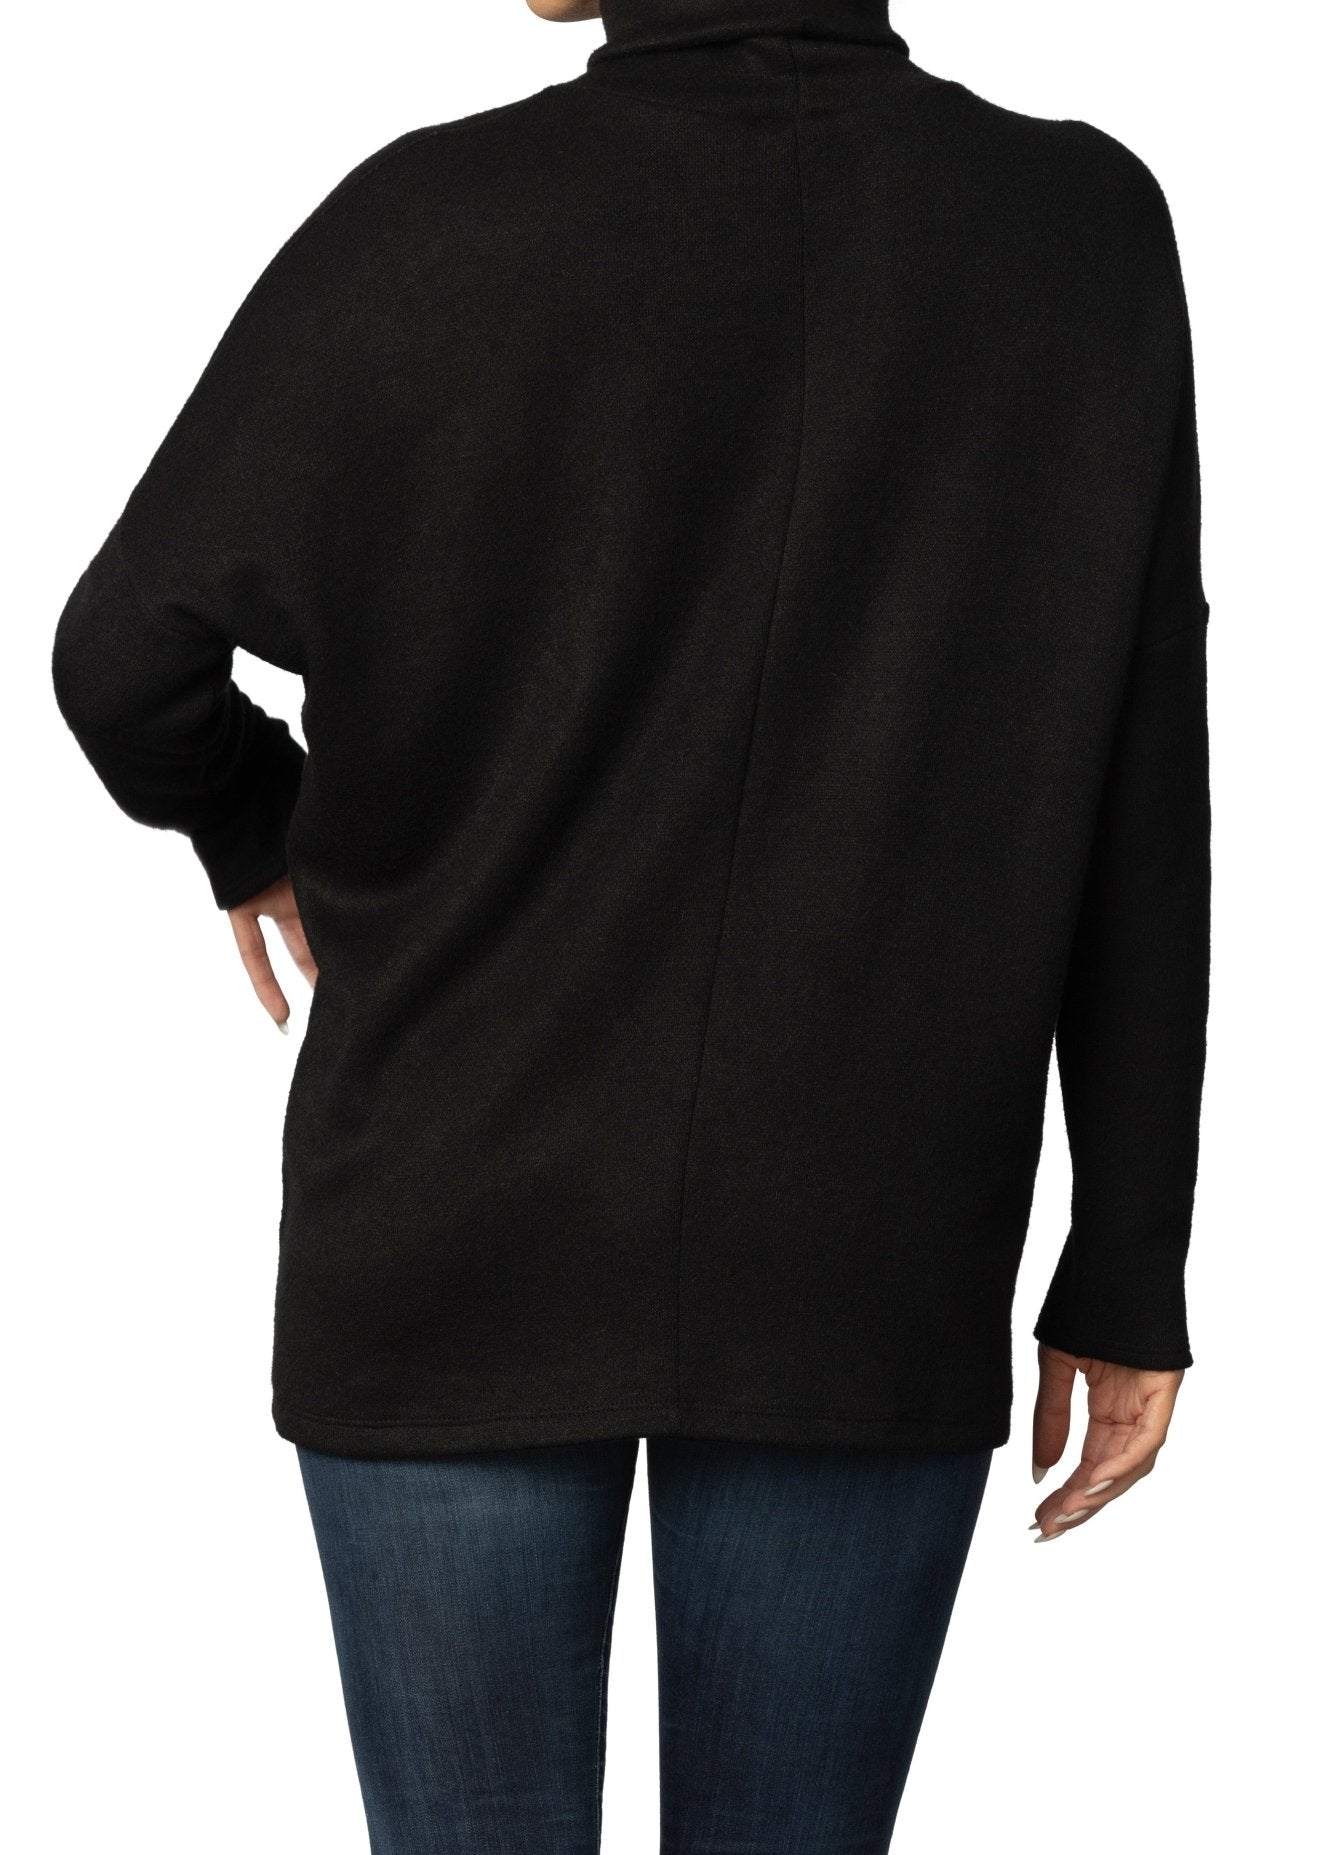 Paris Turtleneck Tunic Sweater - DressbarnSweatshirts & Hoodies